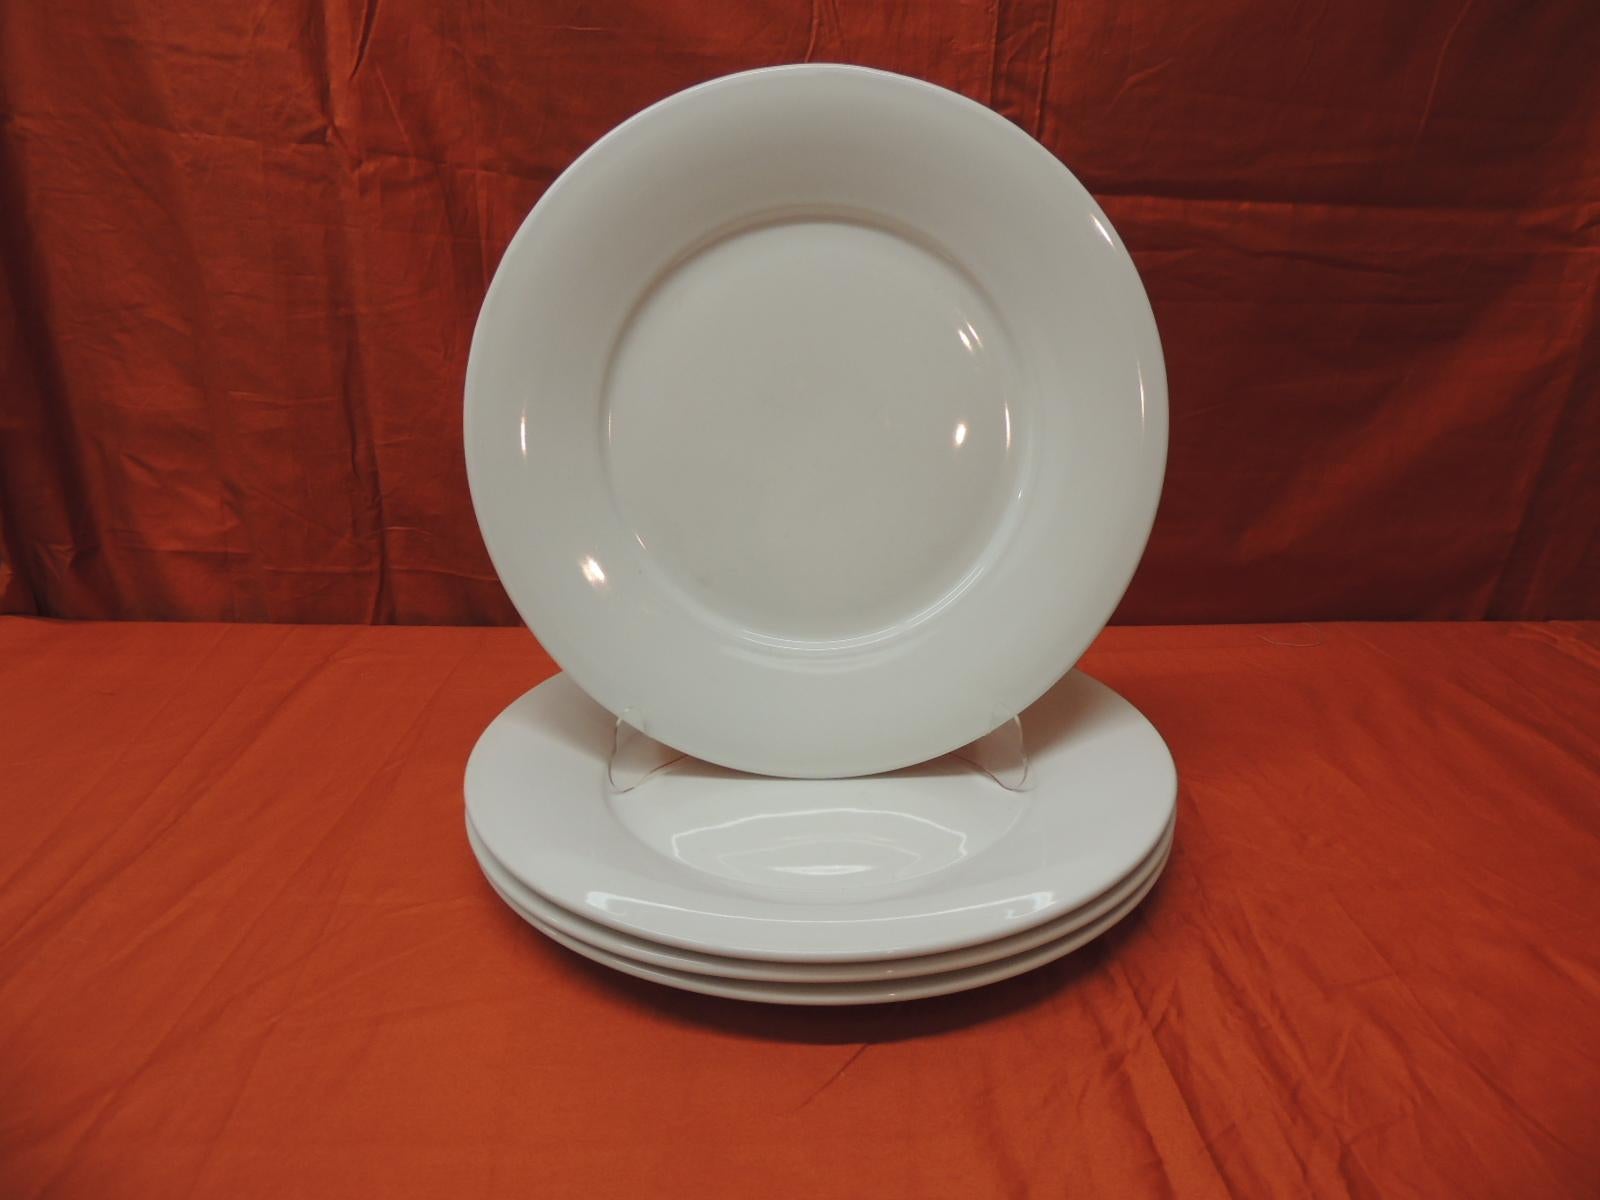 Set of (4) large French porcelain dinner plates.
Large white dinner plates.
Size: 12 1/4 D x 1/2 H.